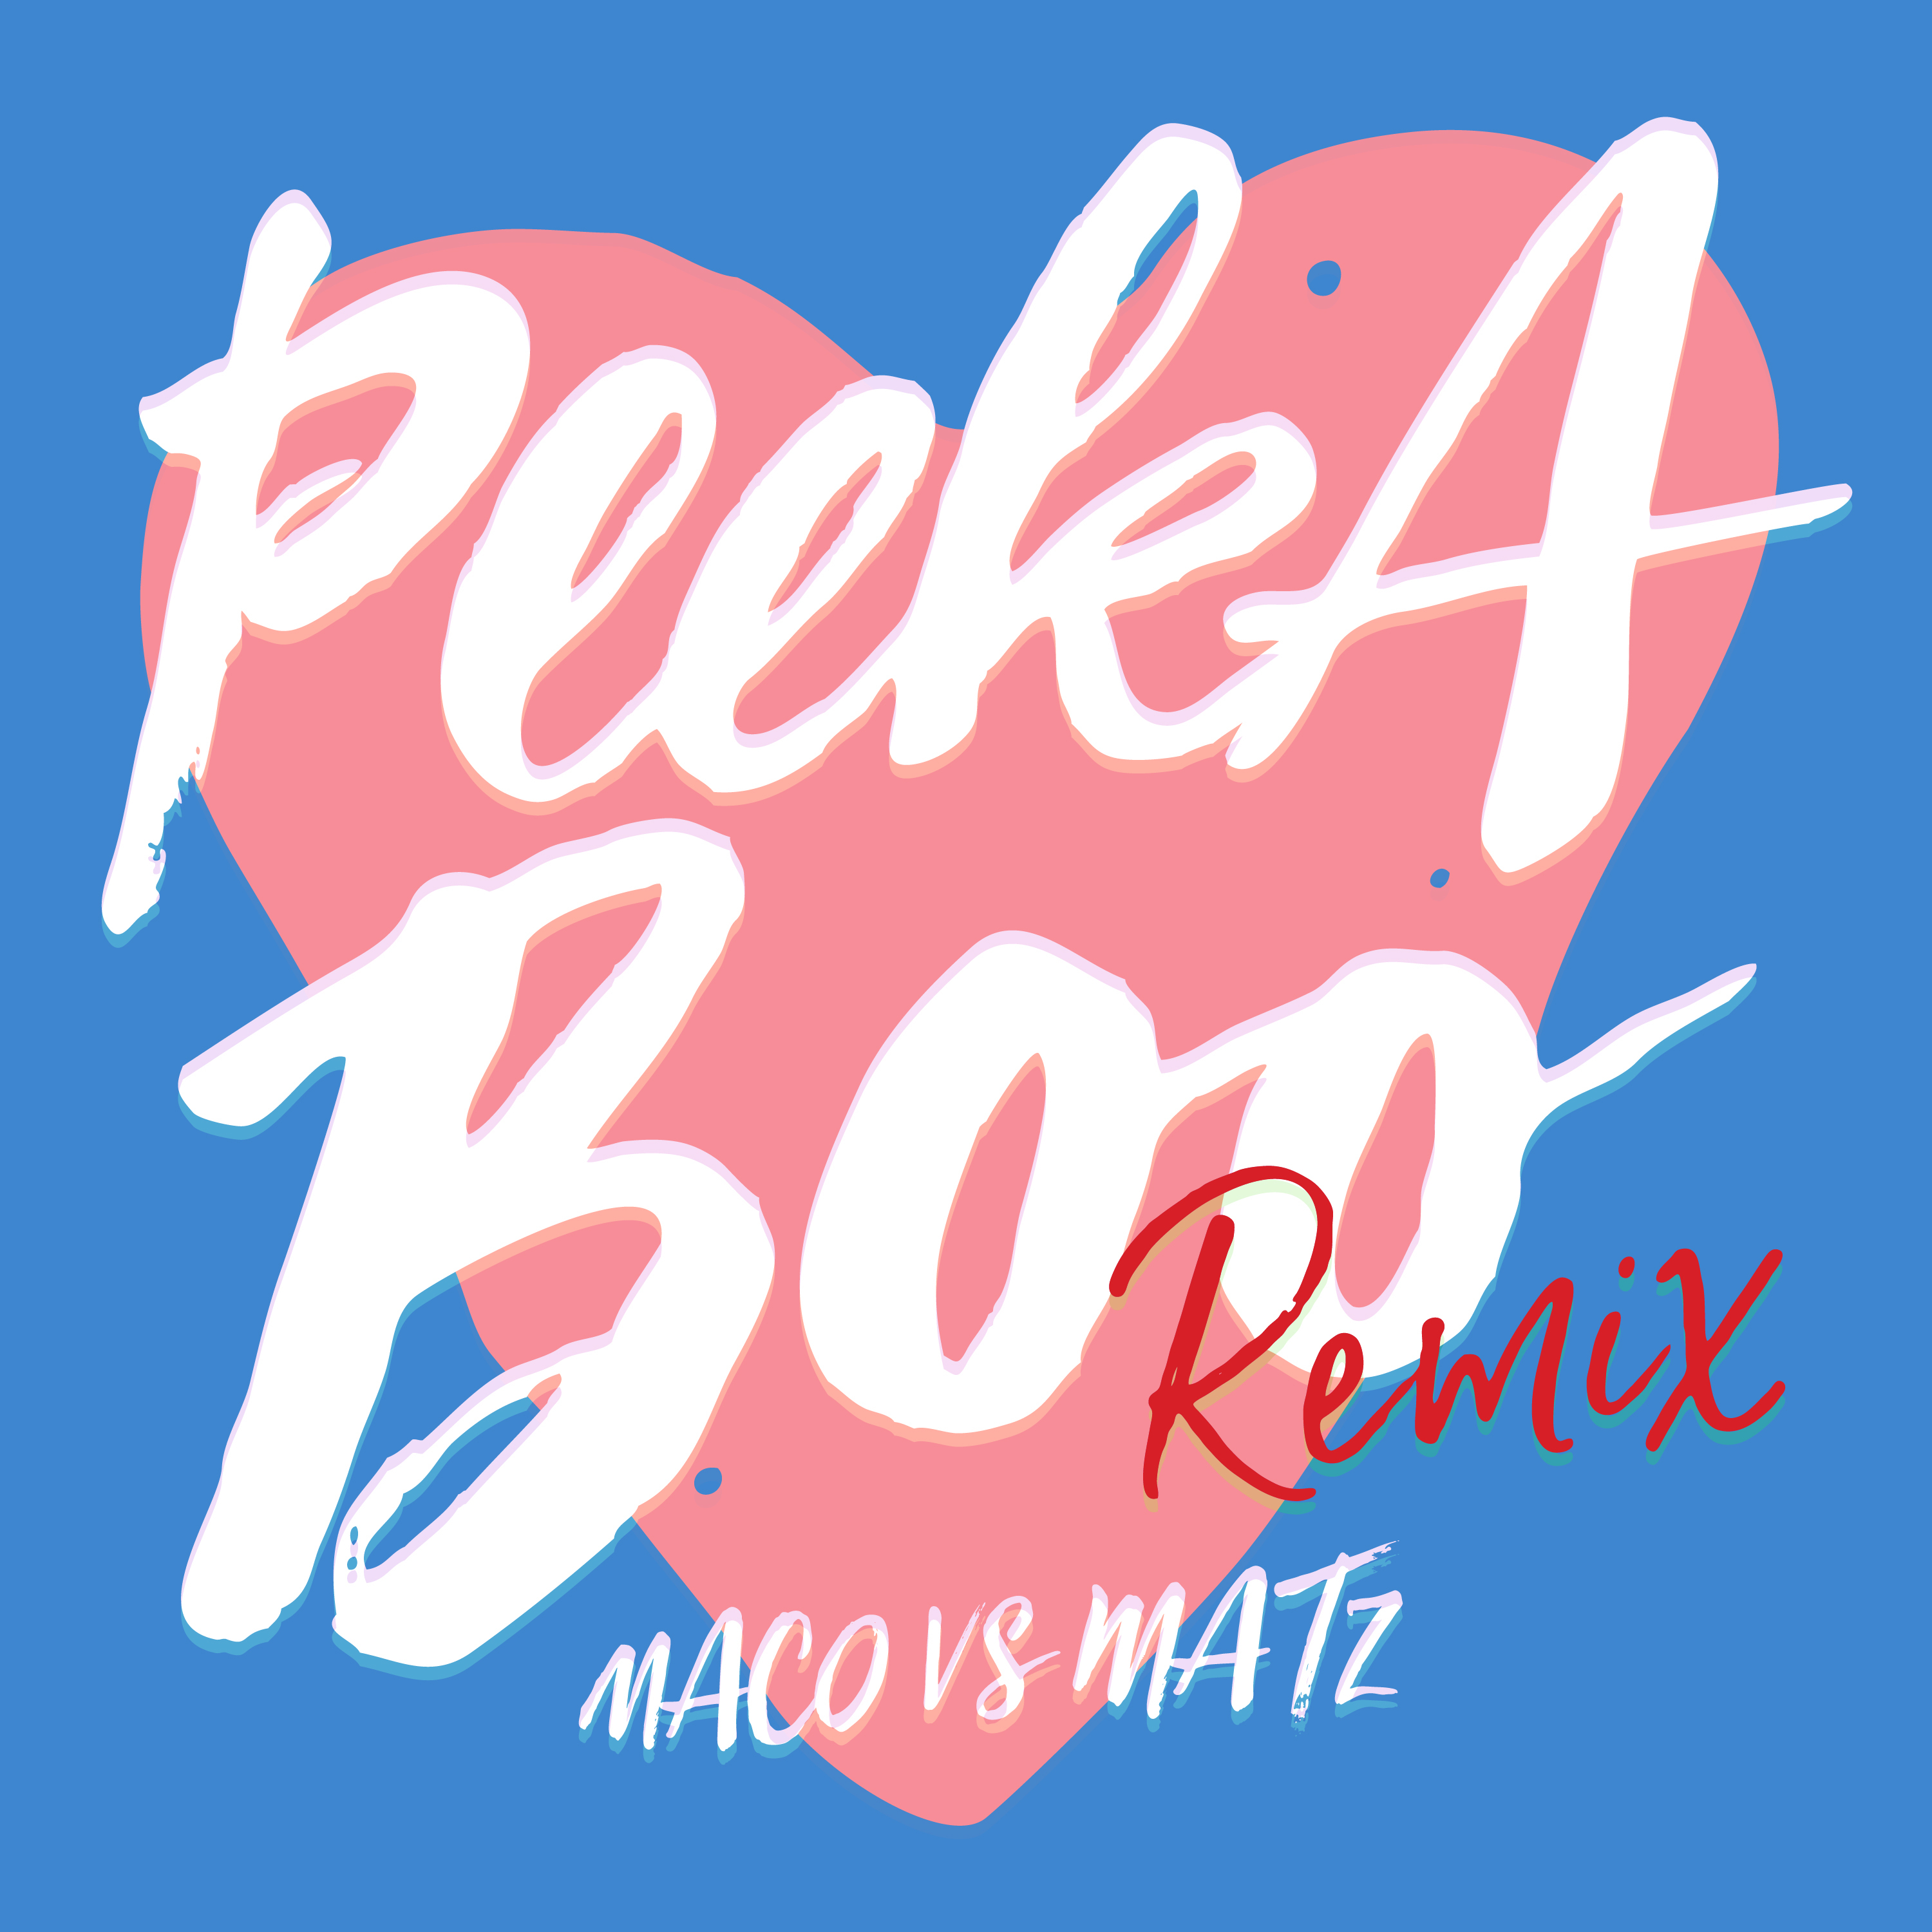 MACO vs. MATZ - PEEKABOO Remix 